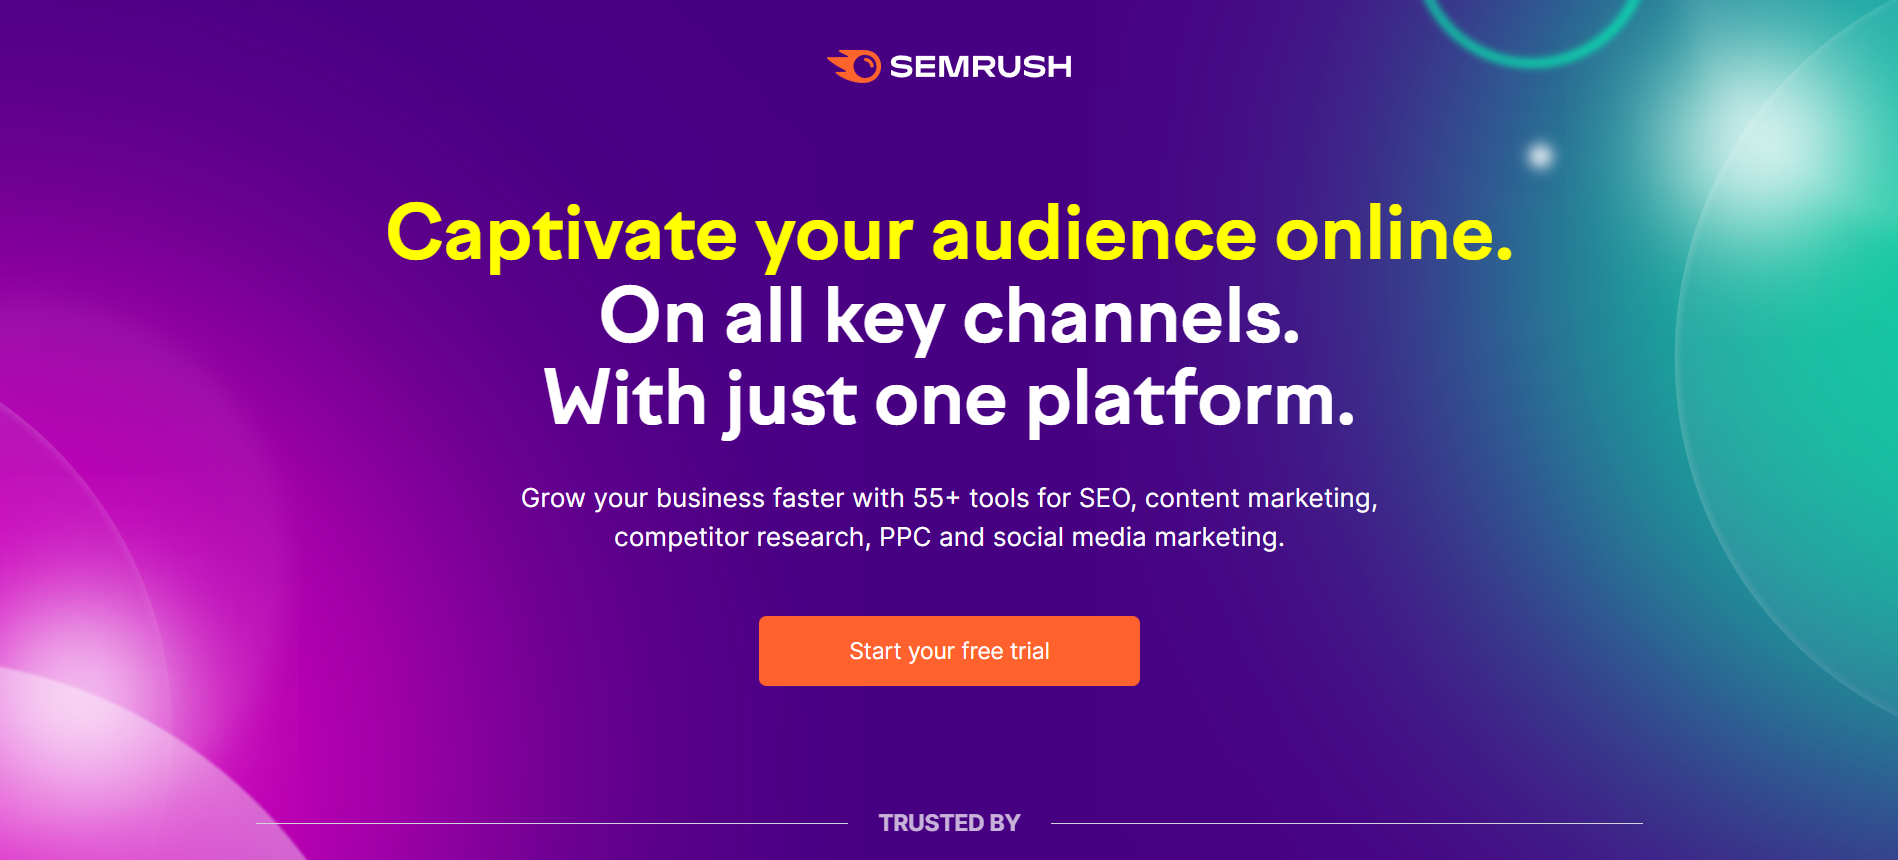 SEMrush - SaaS tools for startups